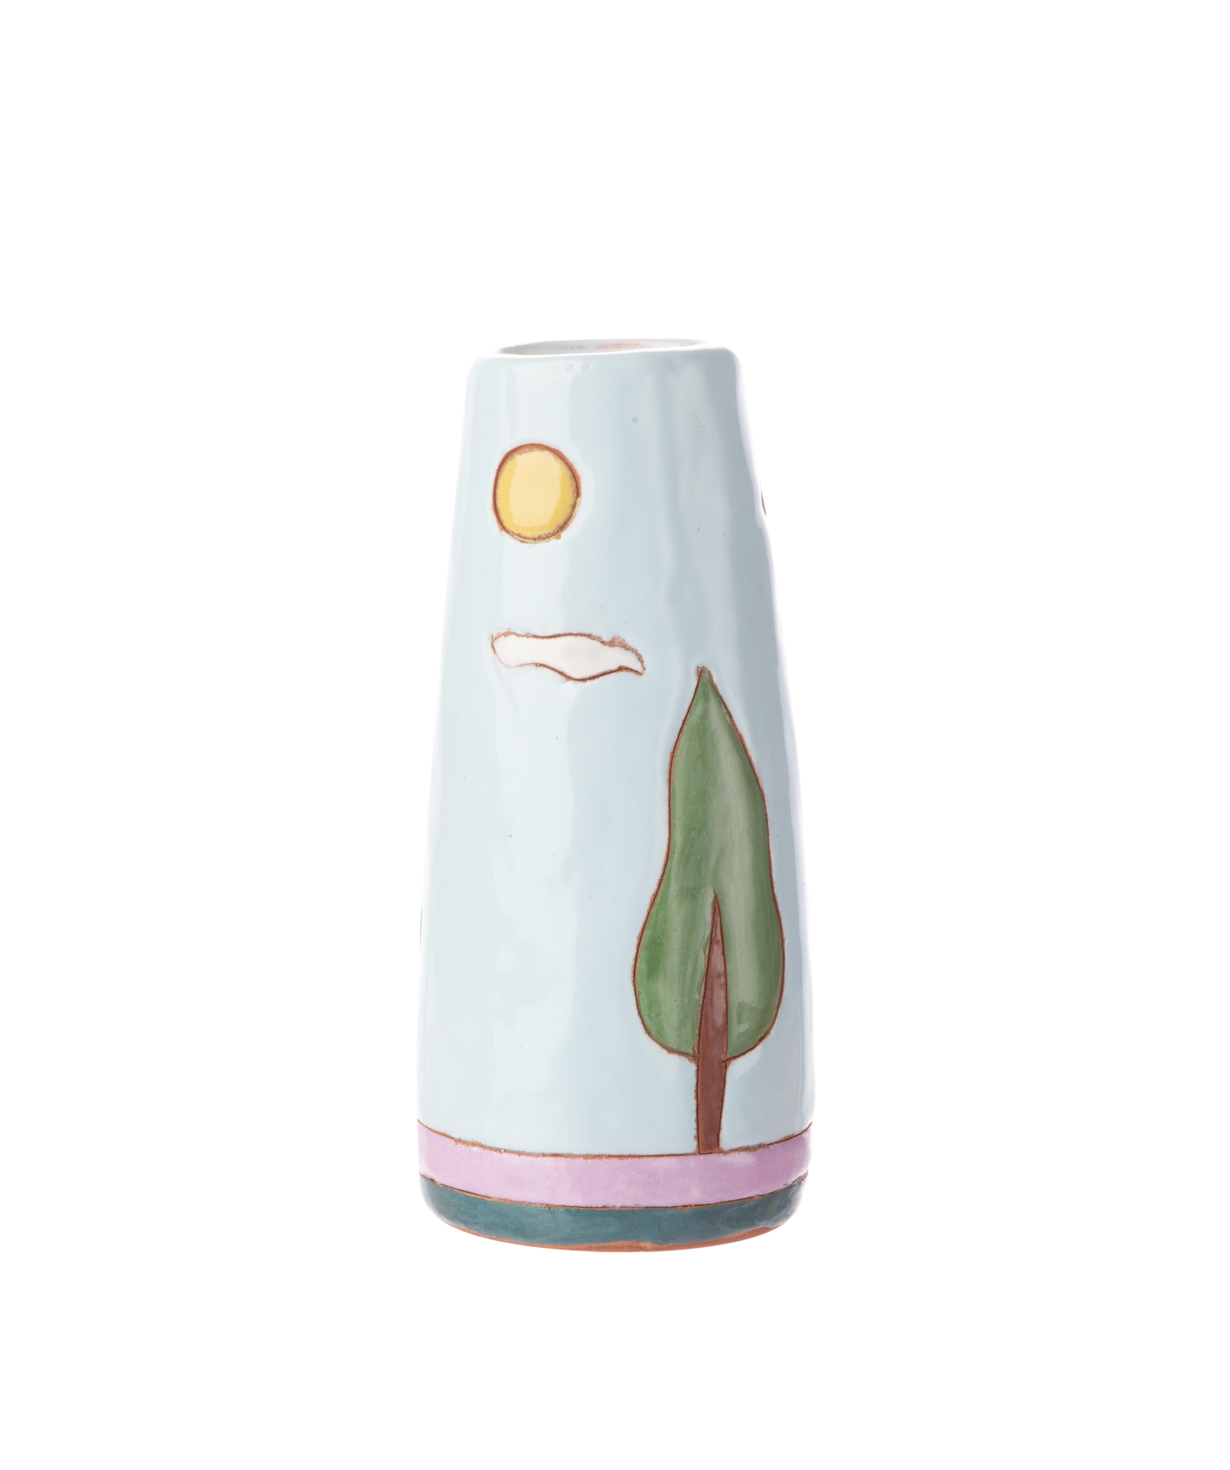 Vase `Nuard Ceramics` for flowers, City, small